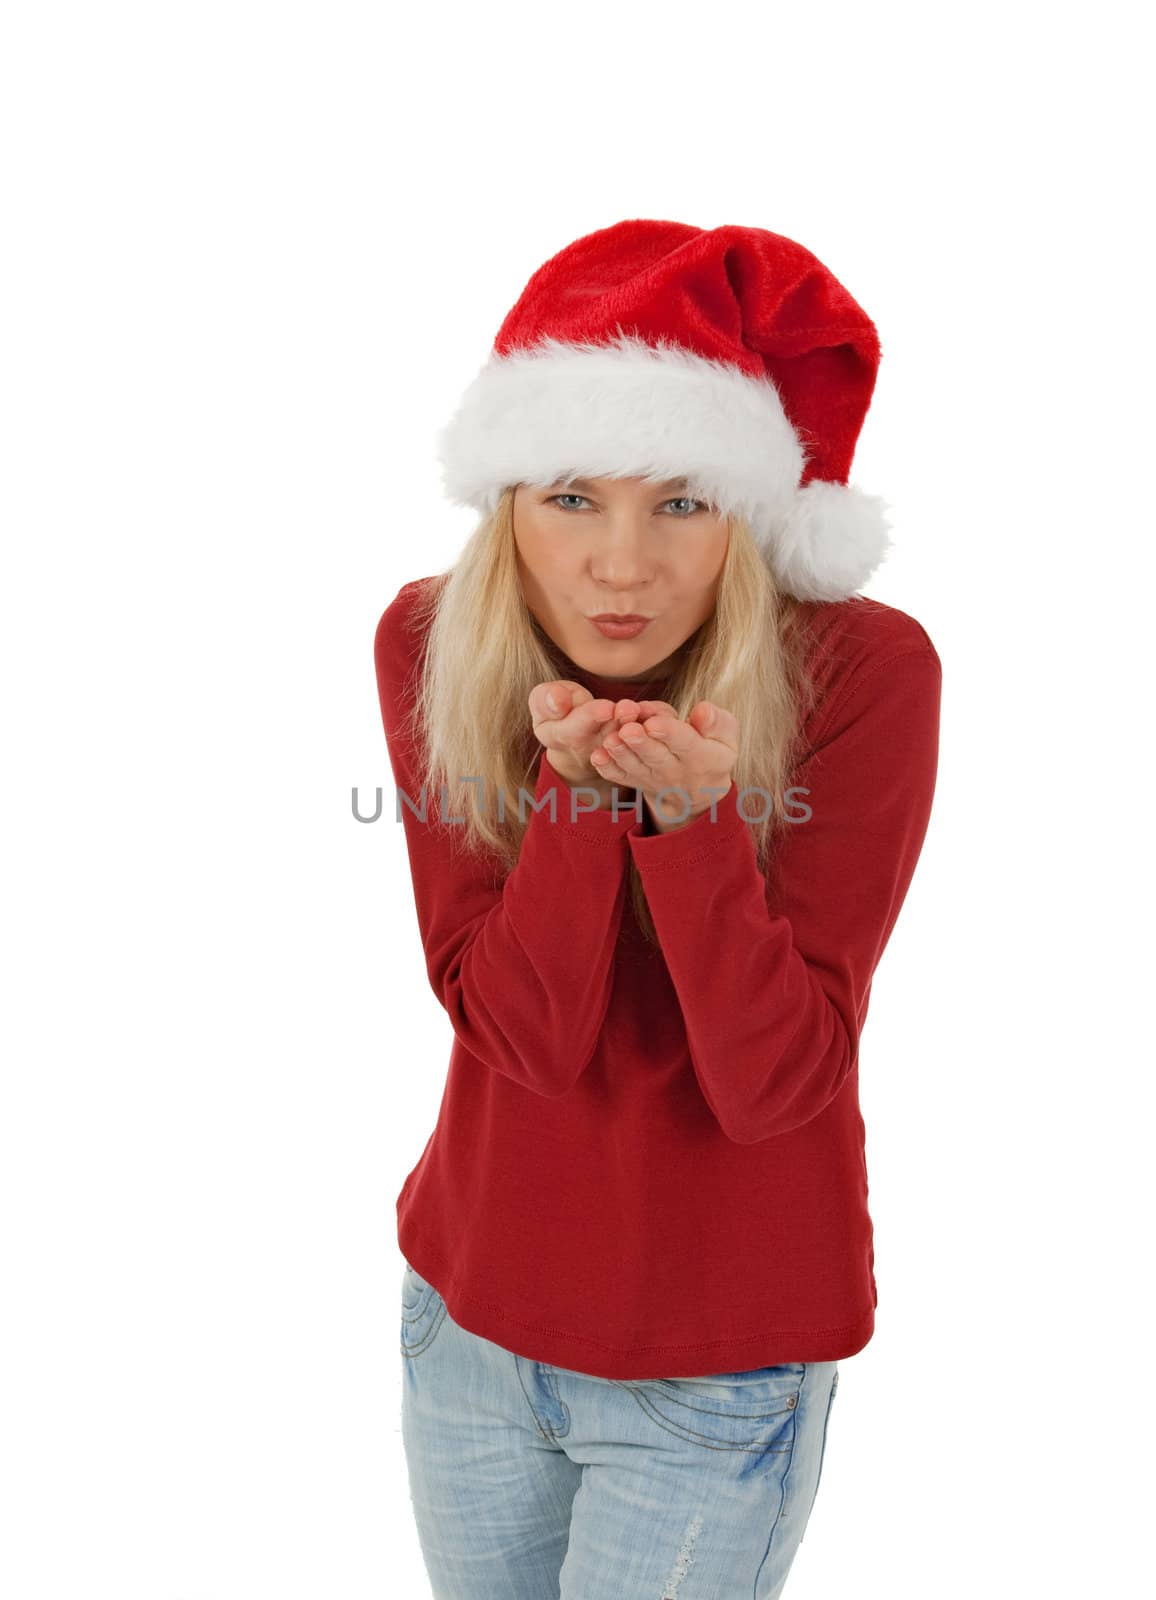 Santa girl wearing Christmas hat sending a kiss. Isolated on white.